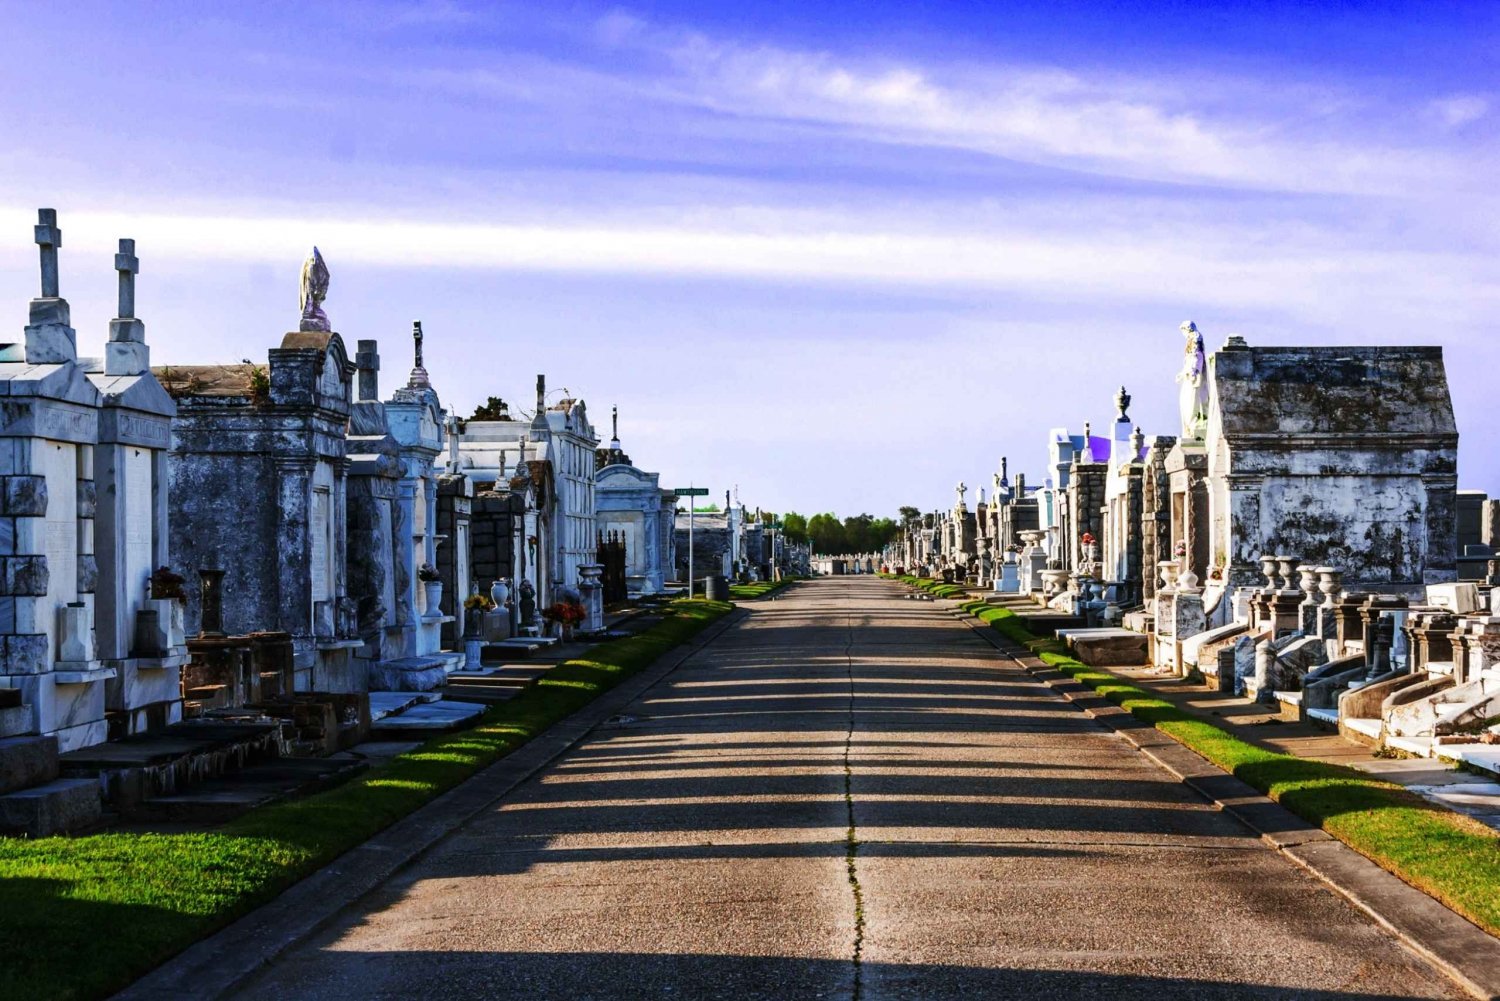 New Orleans: Cemeteries Insiders Walking Tour